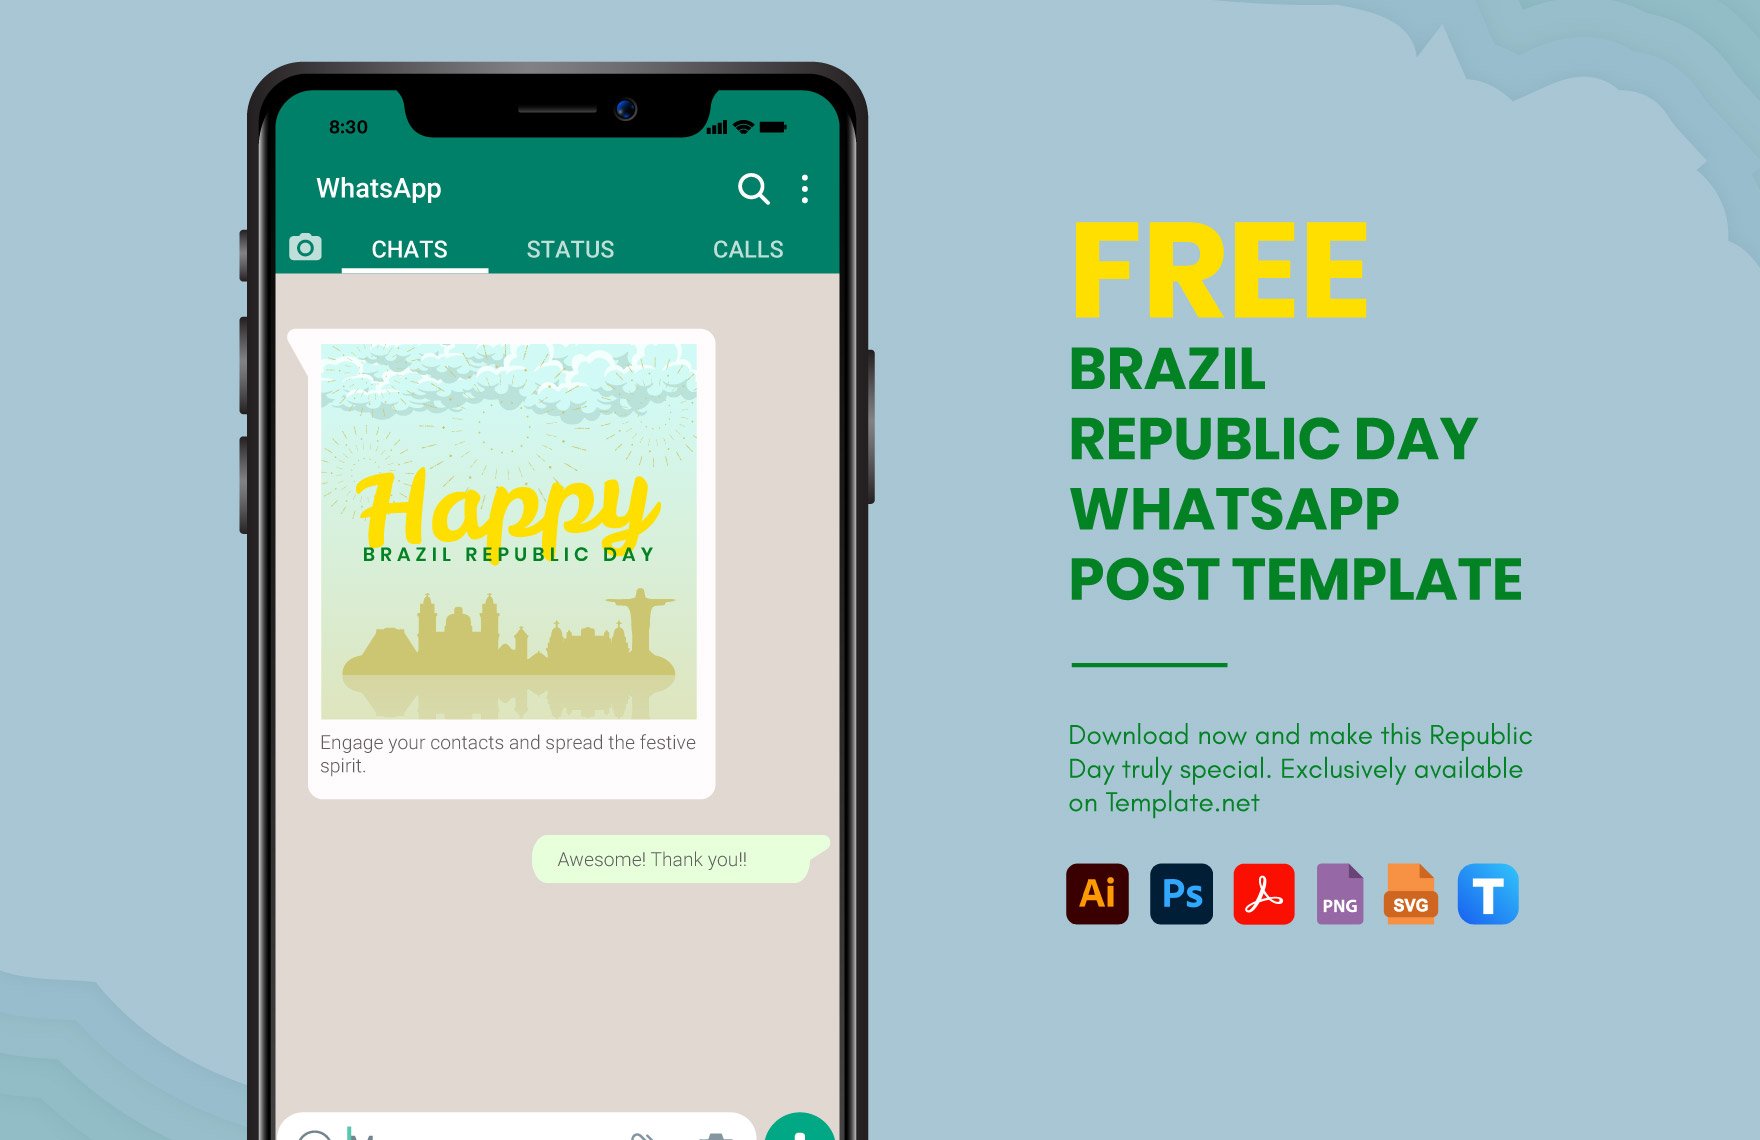 Brazil Republic Day WhatsApp Post Template